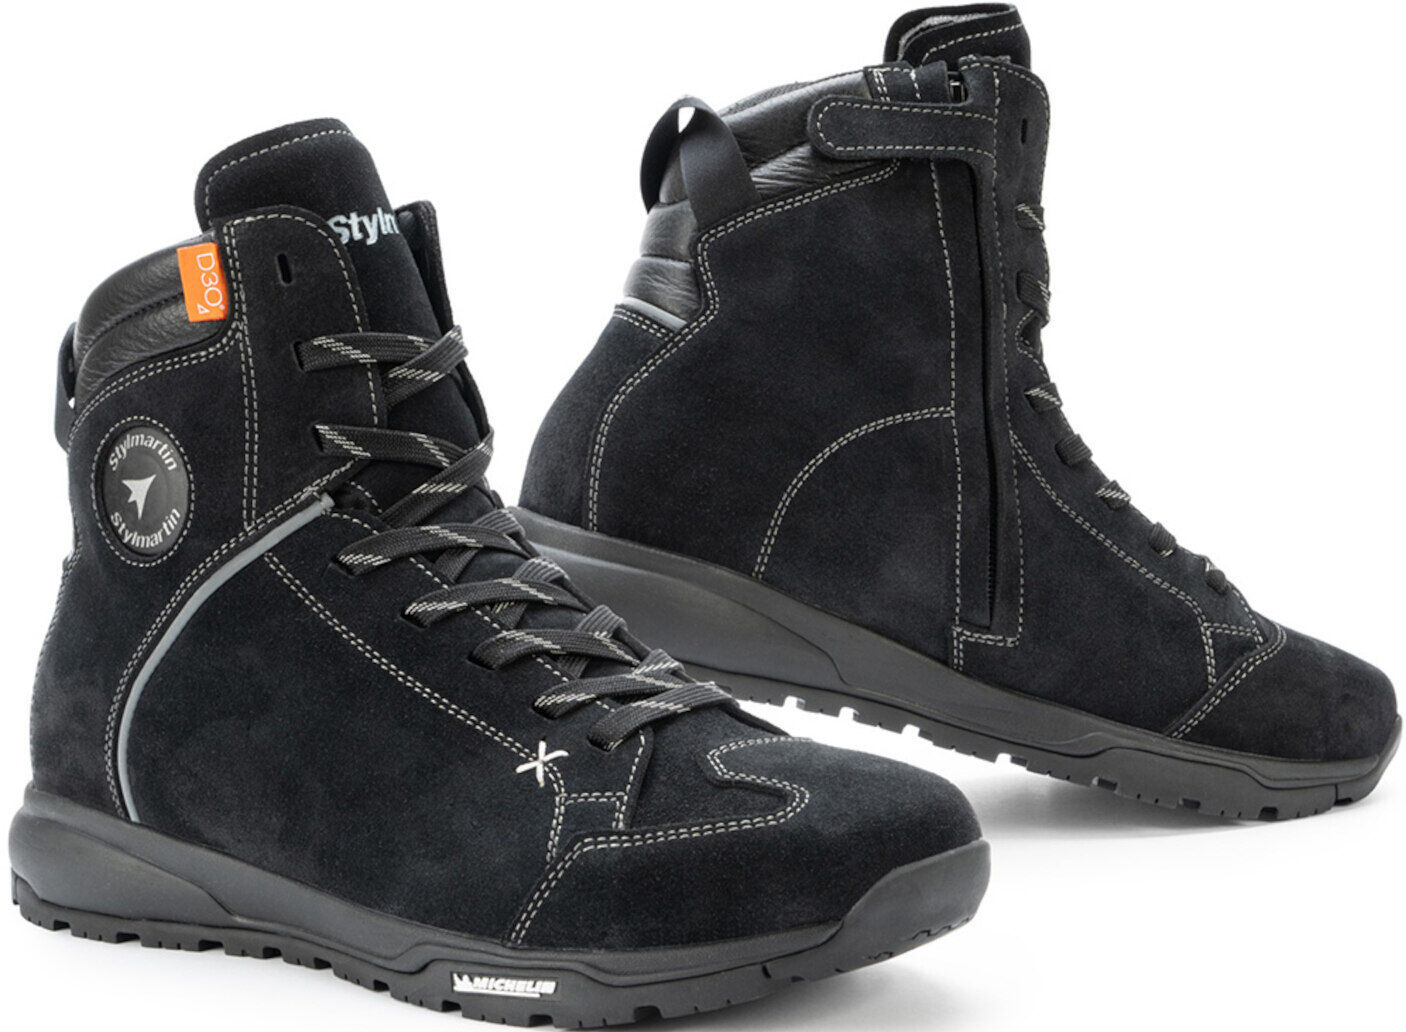 Stylmartin Zed Zapatos de moto impermeables - Negro (40)